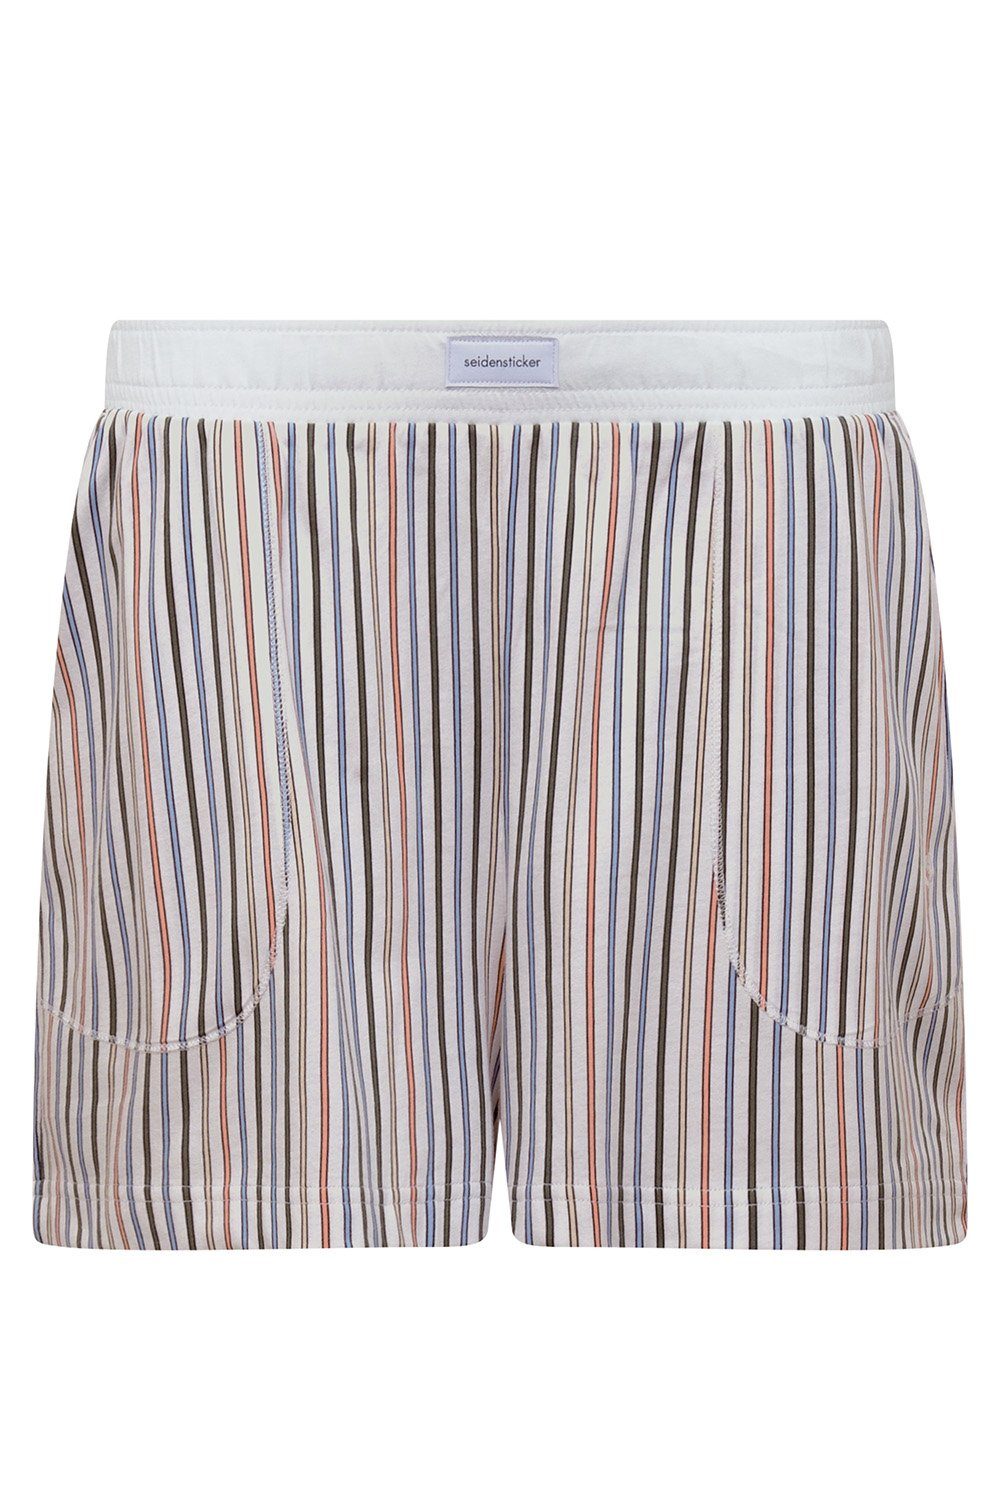 seidensticker Shorts Shorts Printed 514360